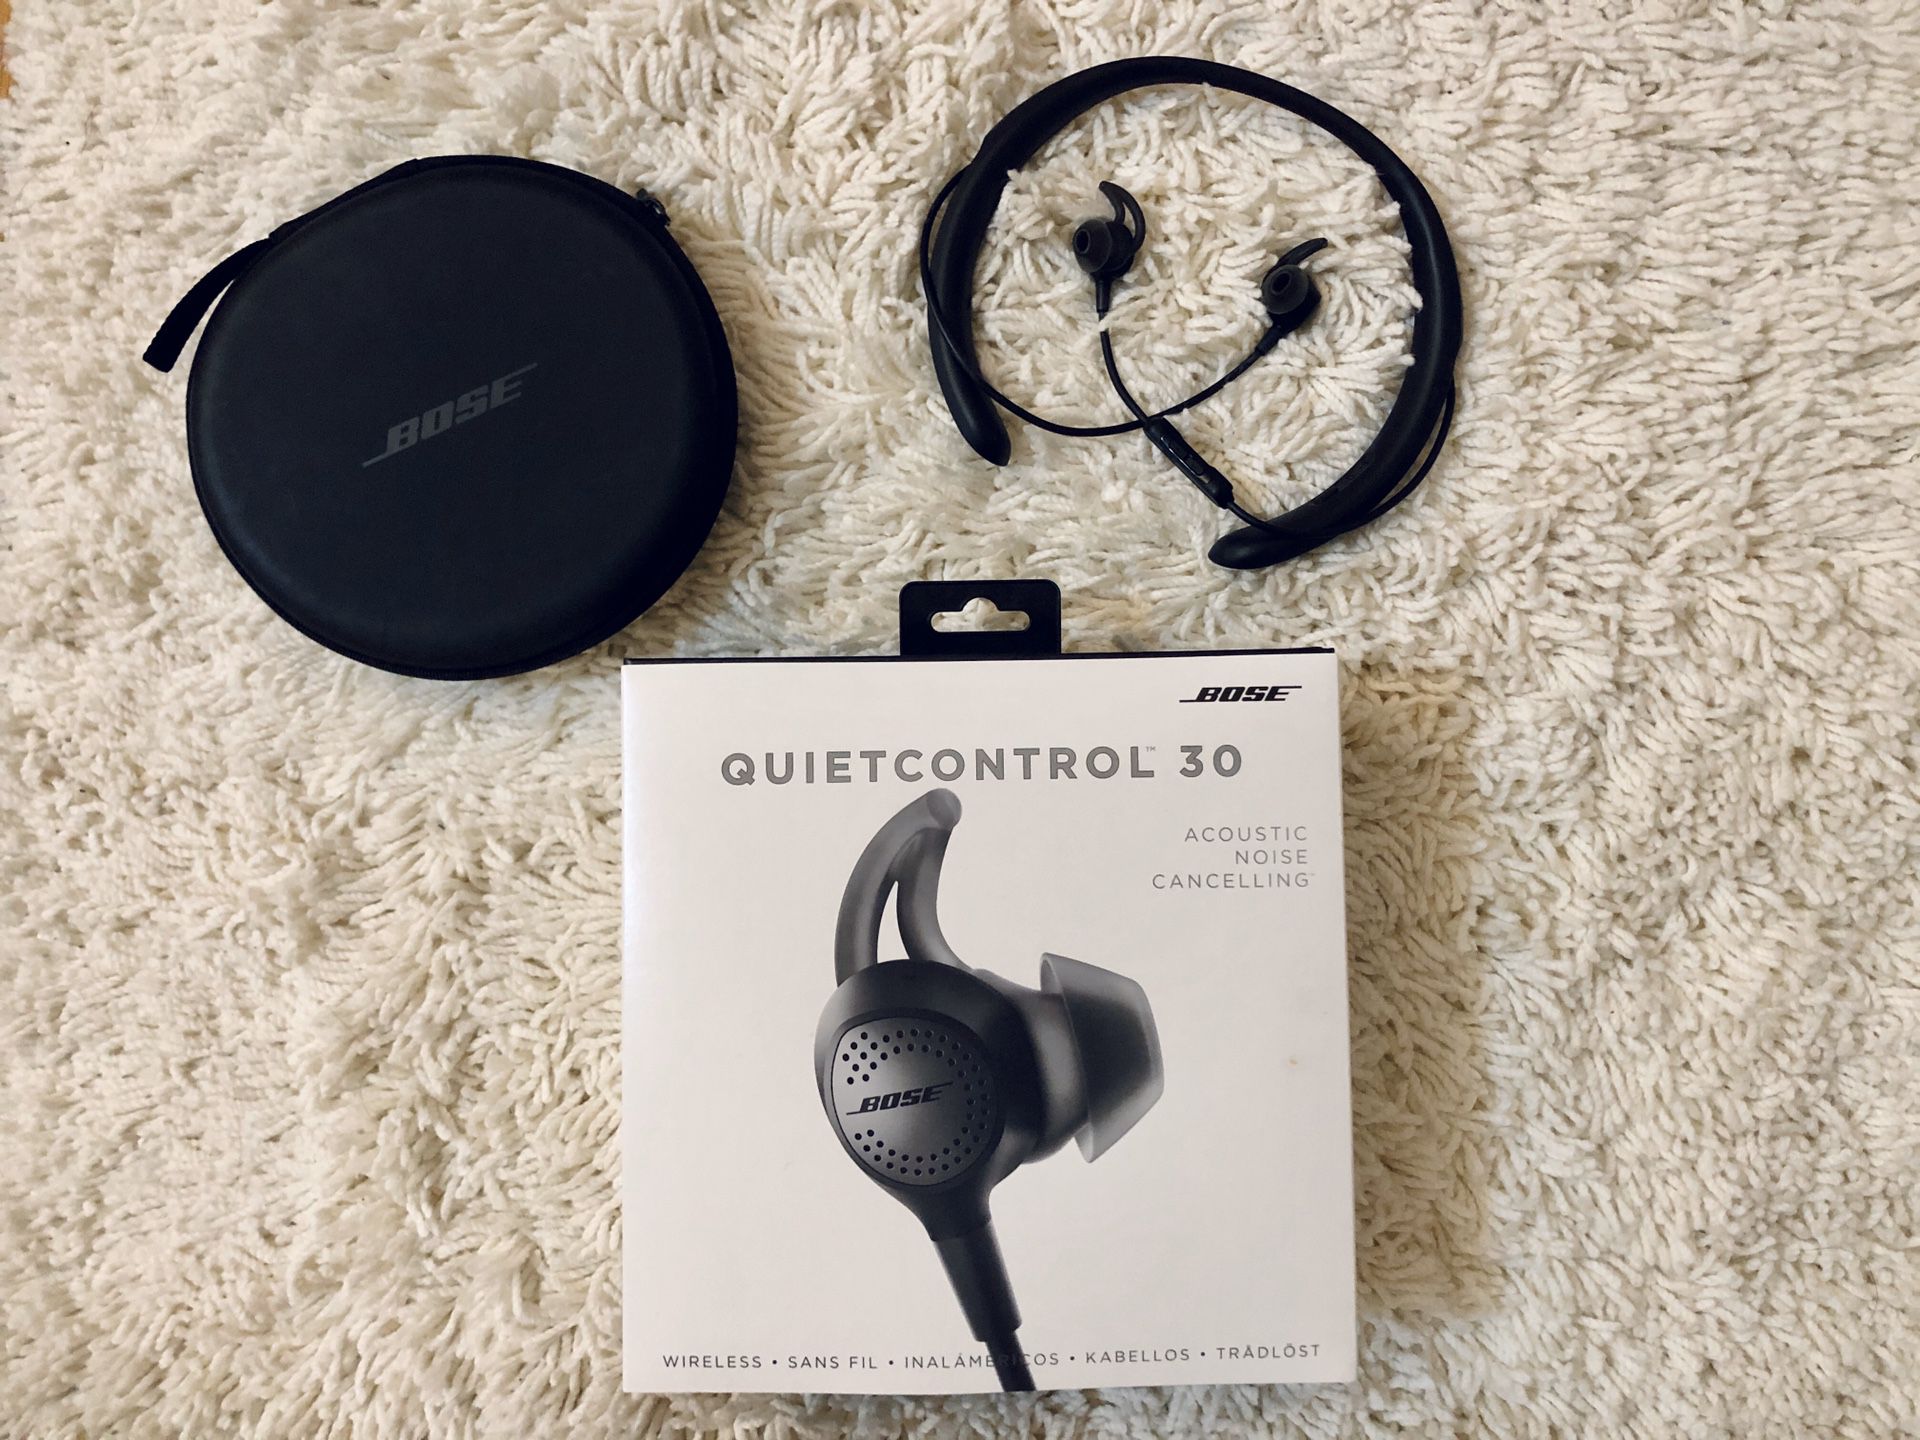 Bose Quiet Control 30 (QC 30) wireless headphones